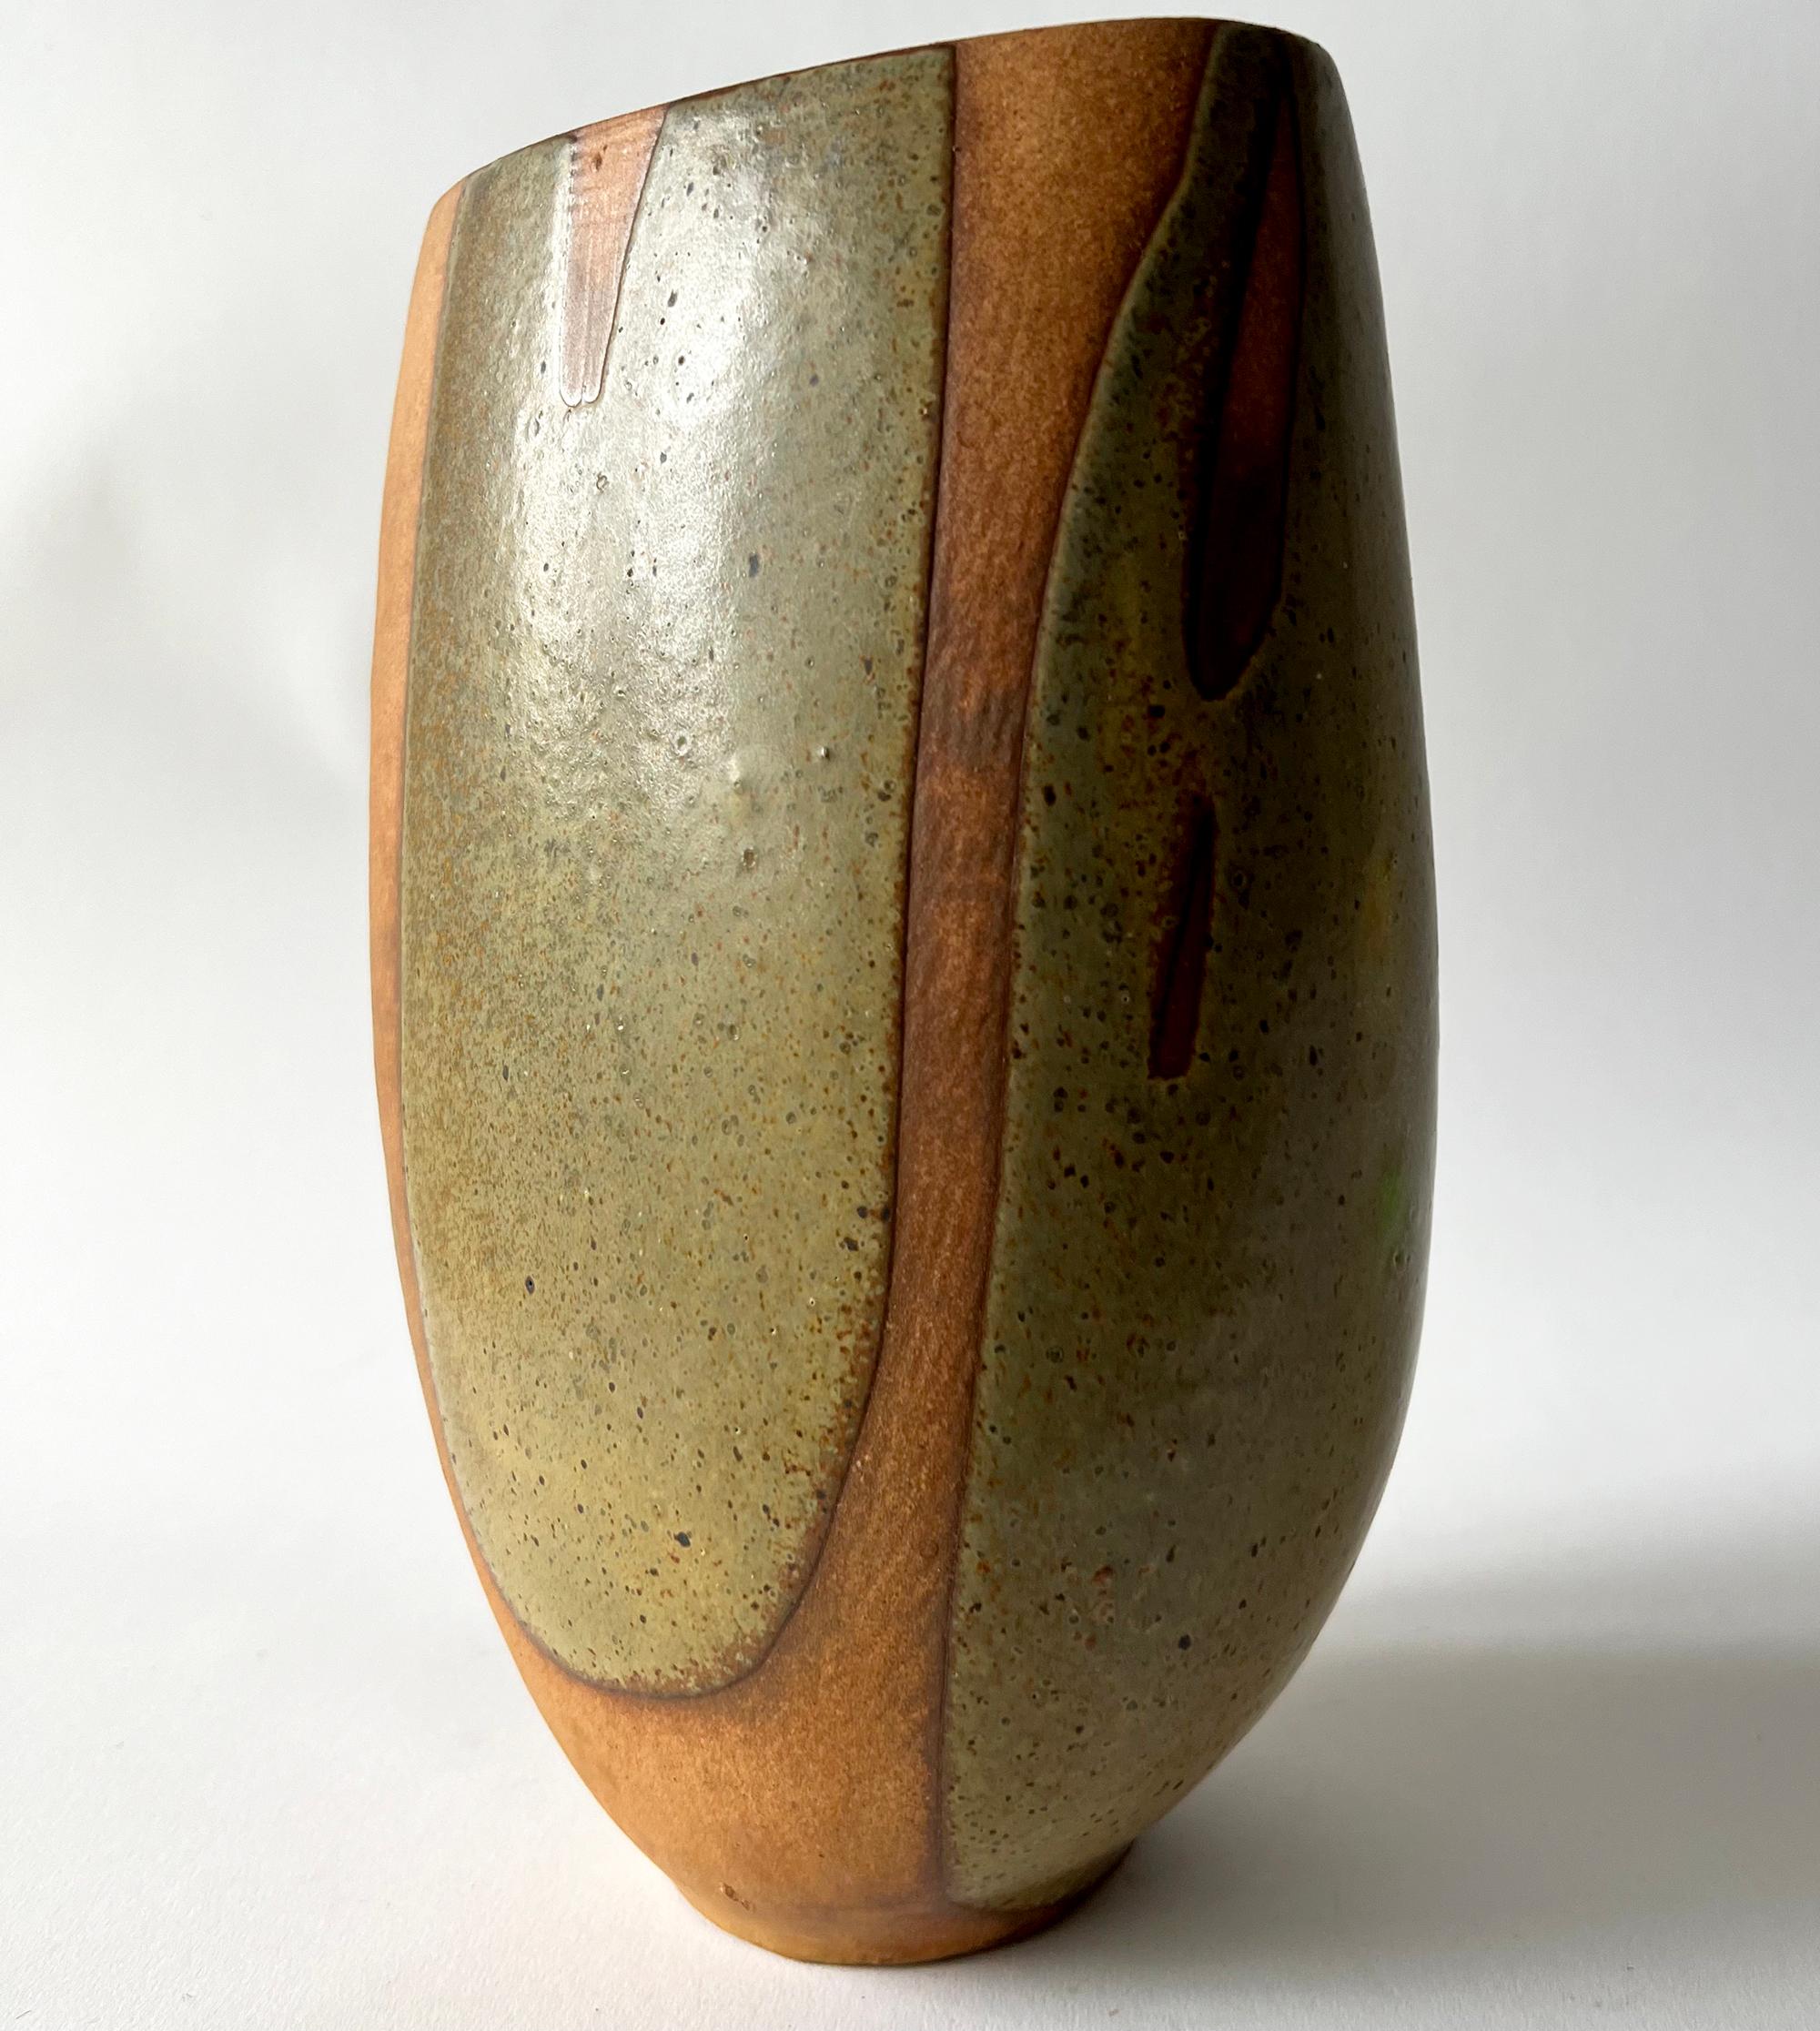 California studio pottery vase created by Tom McMillin. Vase measures 9.75